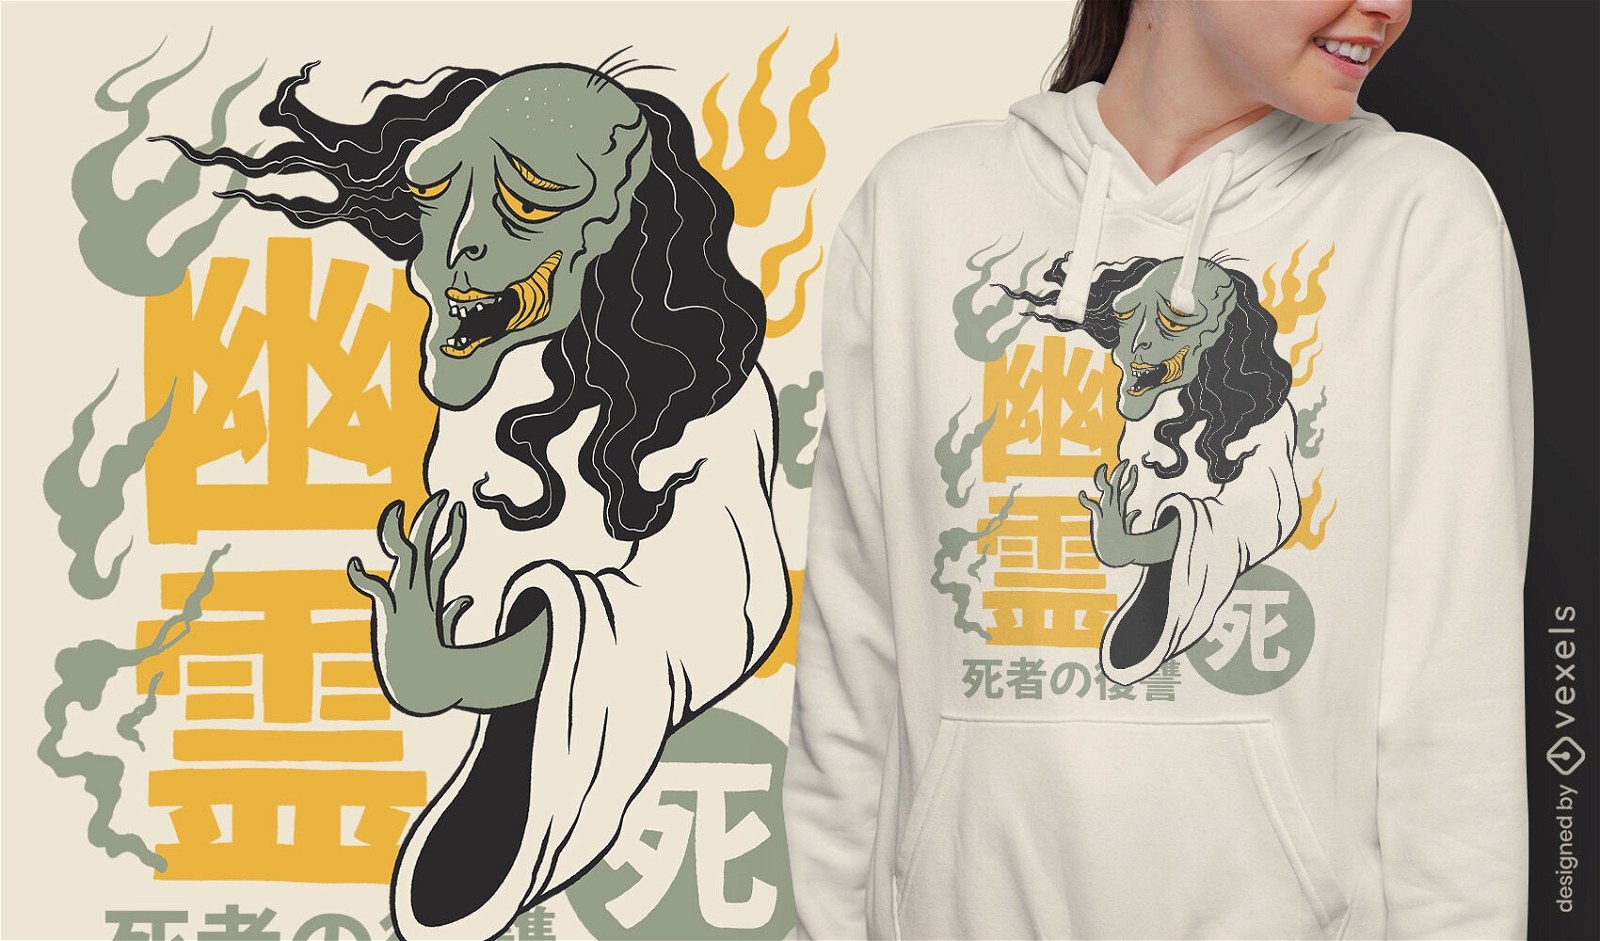 Japanisches T-Shirt-Design des faulen Geistes